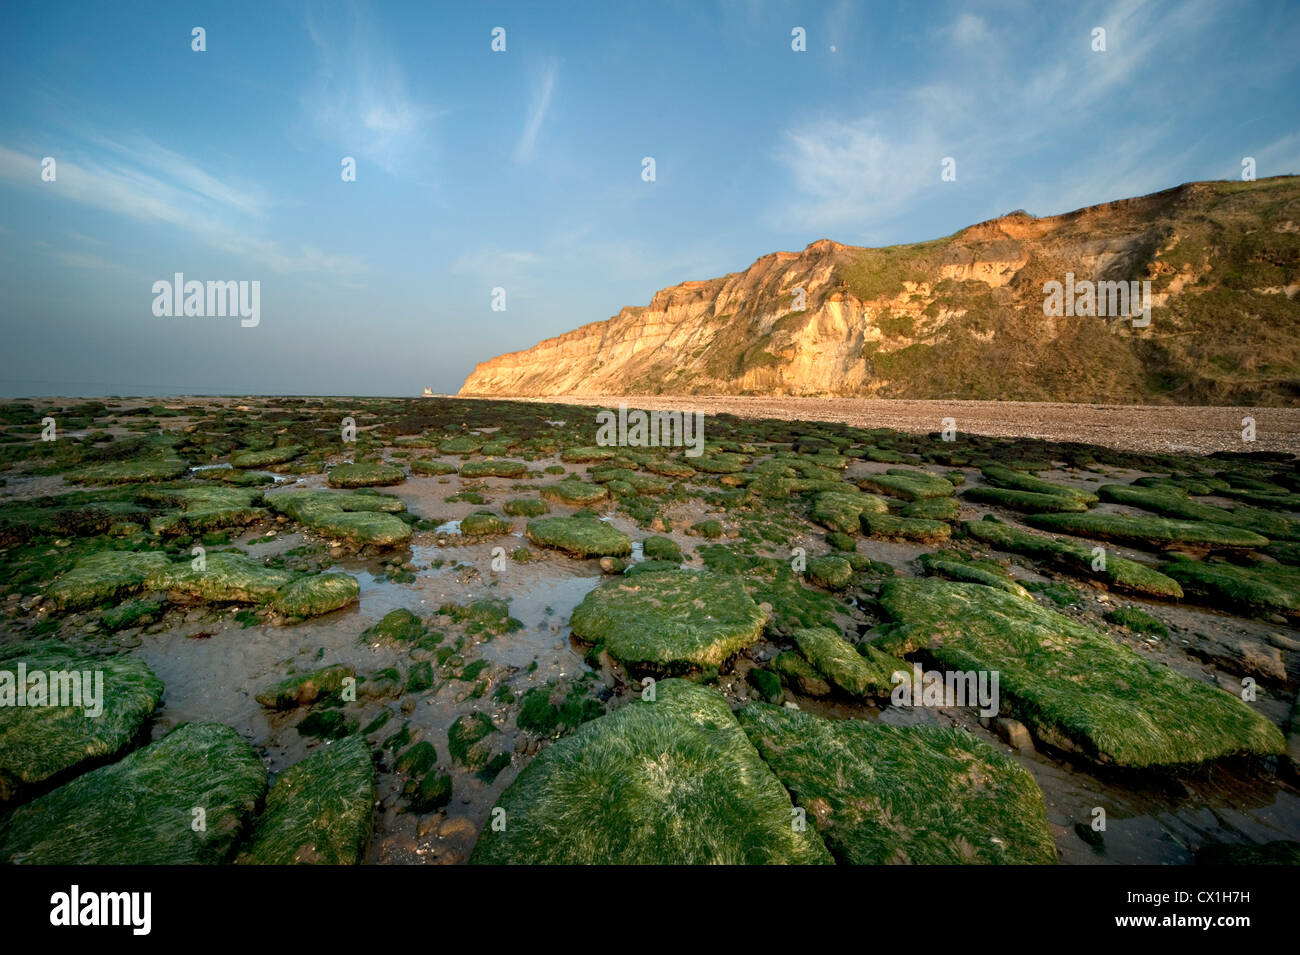 Küste South East Kent UK Gezeiten-Shoreline Flut heraus, die grünen Algen auf Felsen Kreide Klippen Kiesstrand Reculver Türme Stockfoto